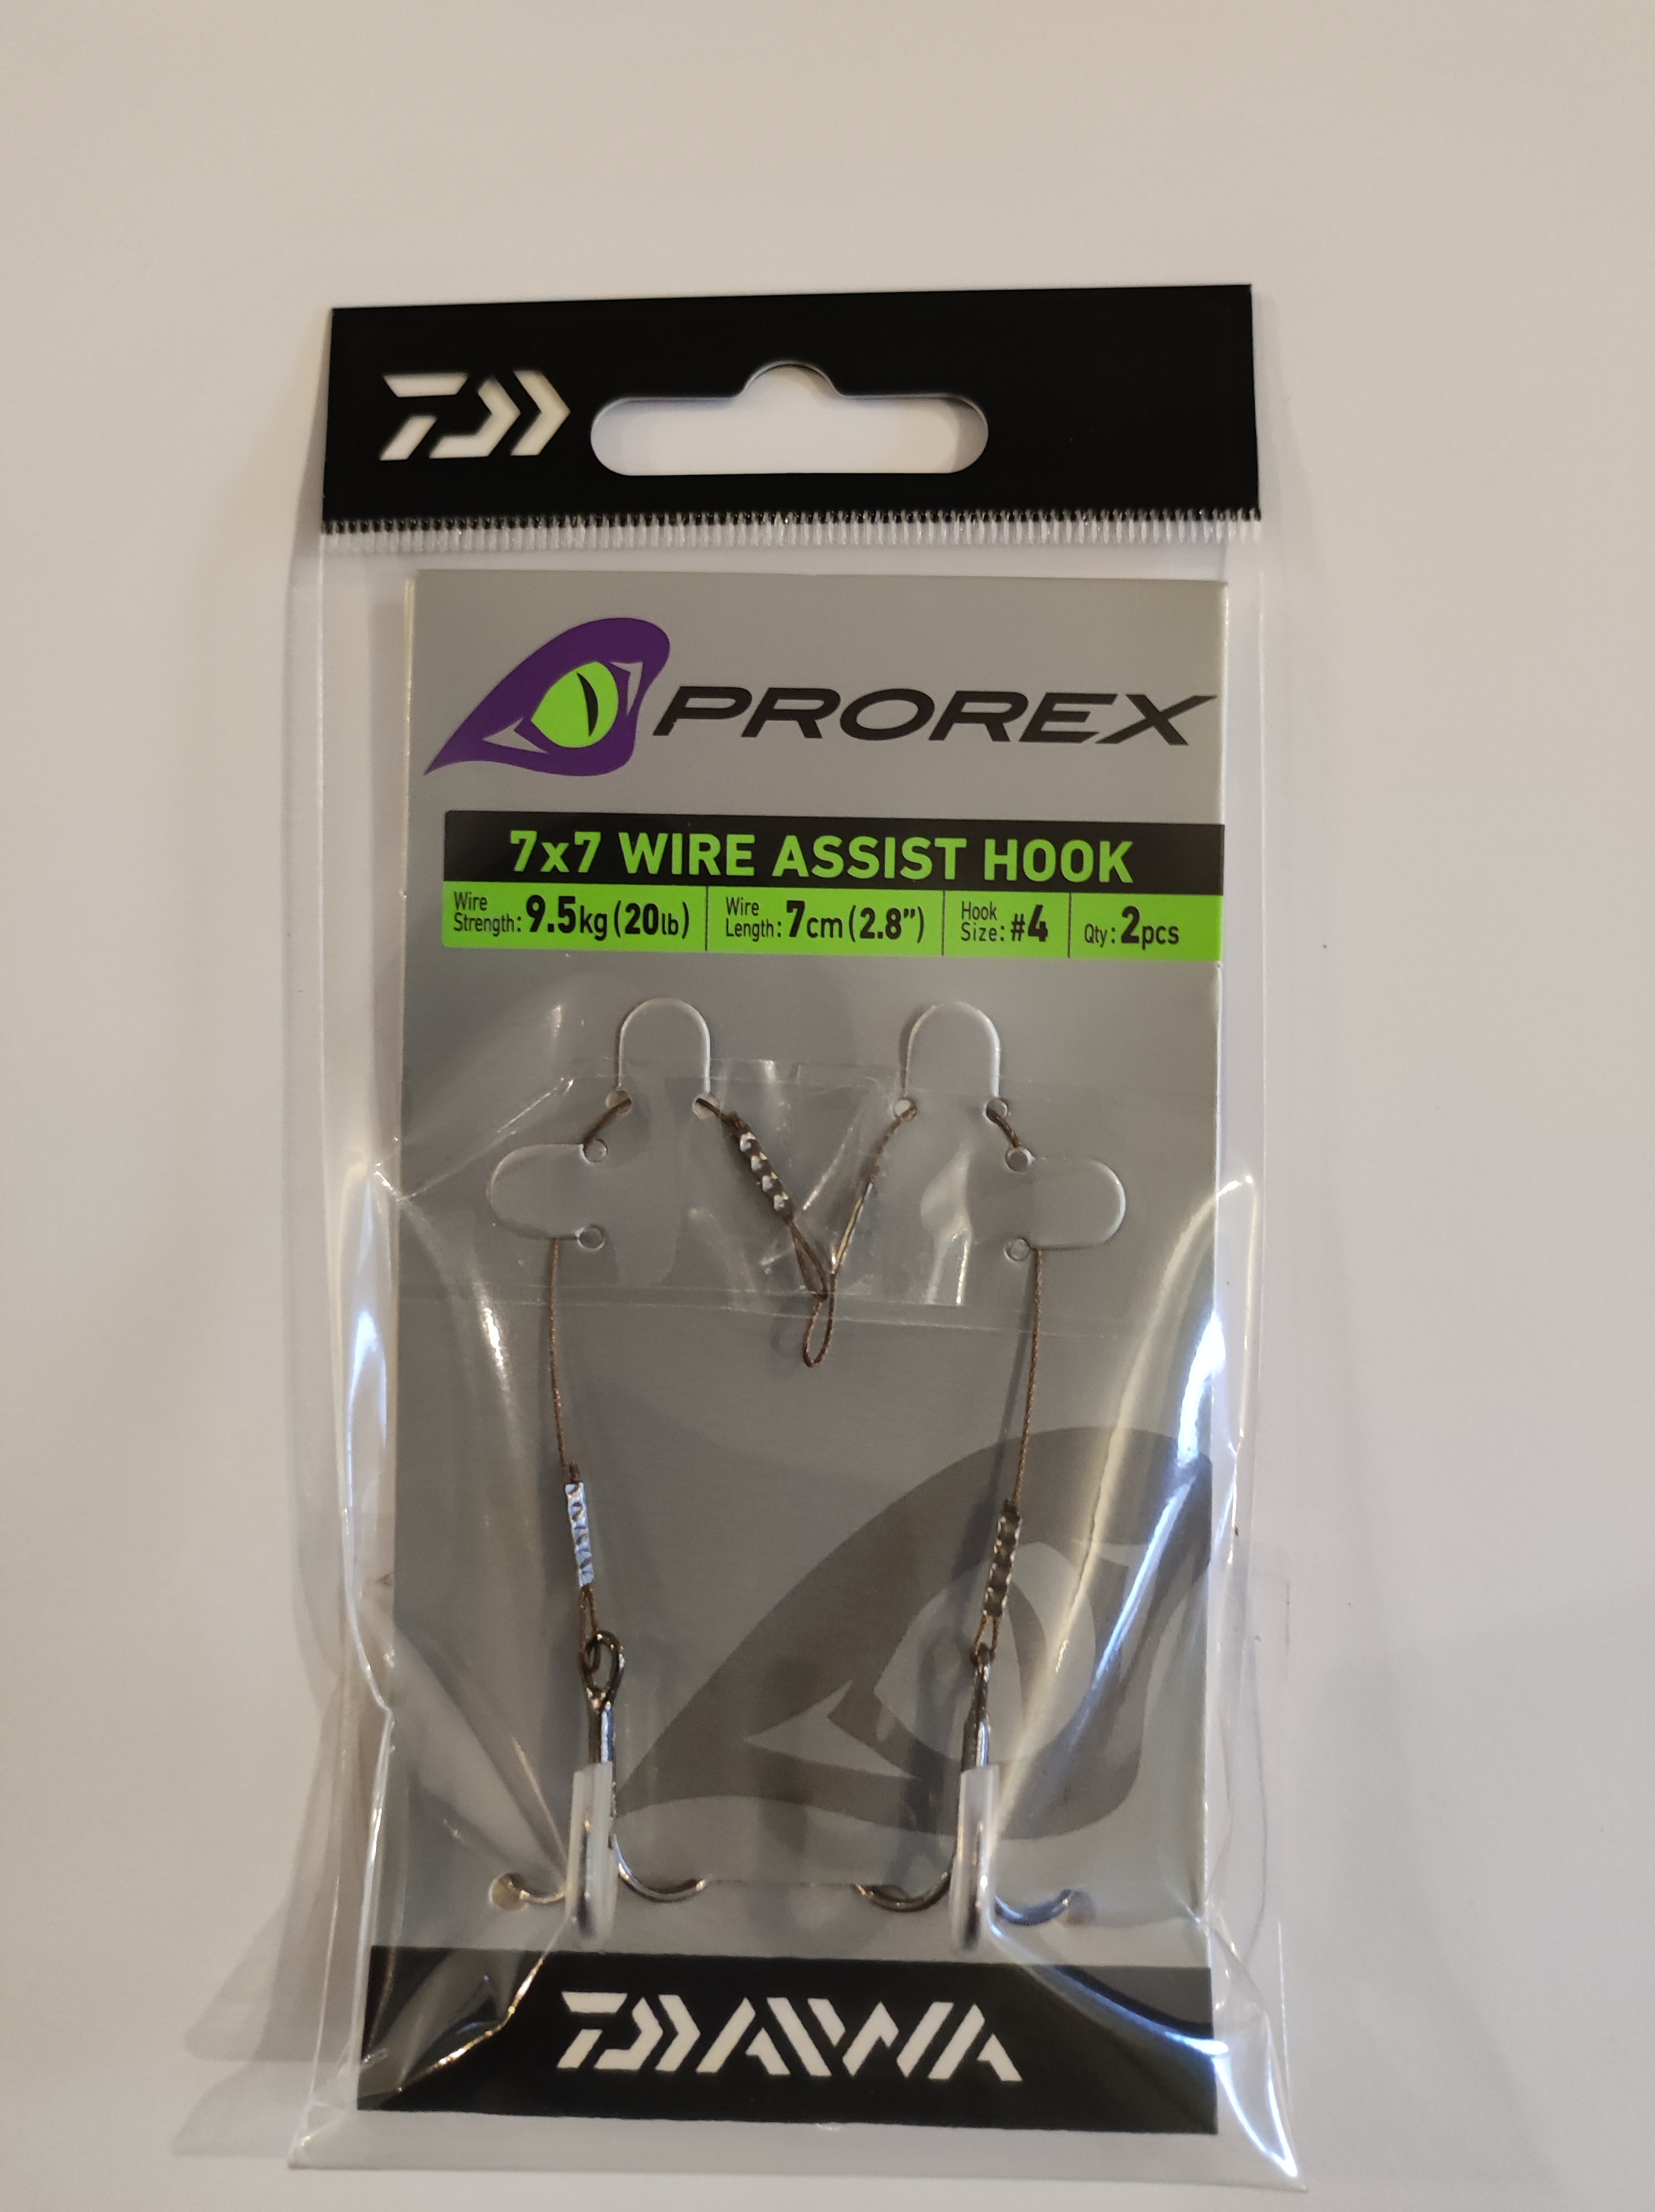 Prorex 7x7 Wire Assist Hook 7cm